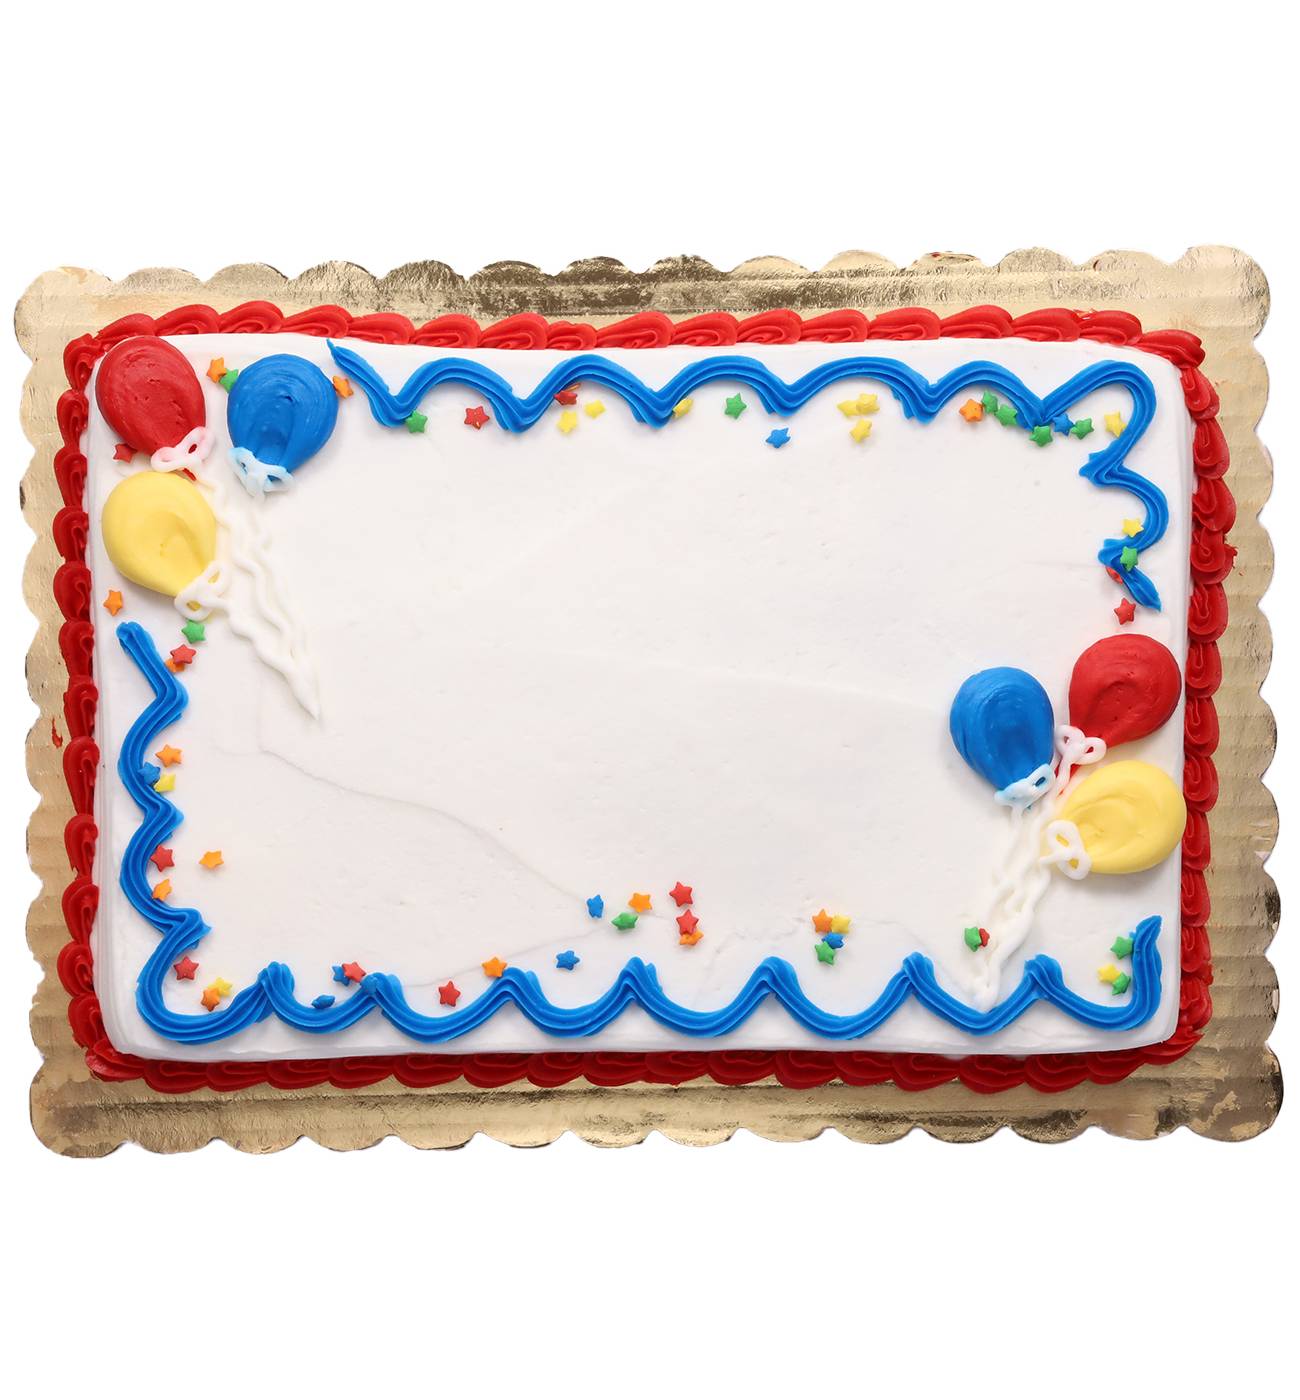 Baker Maid Balloon Celebration Buttercream Chocolate Cake; image 2 of 3